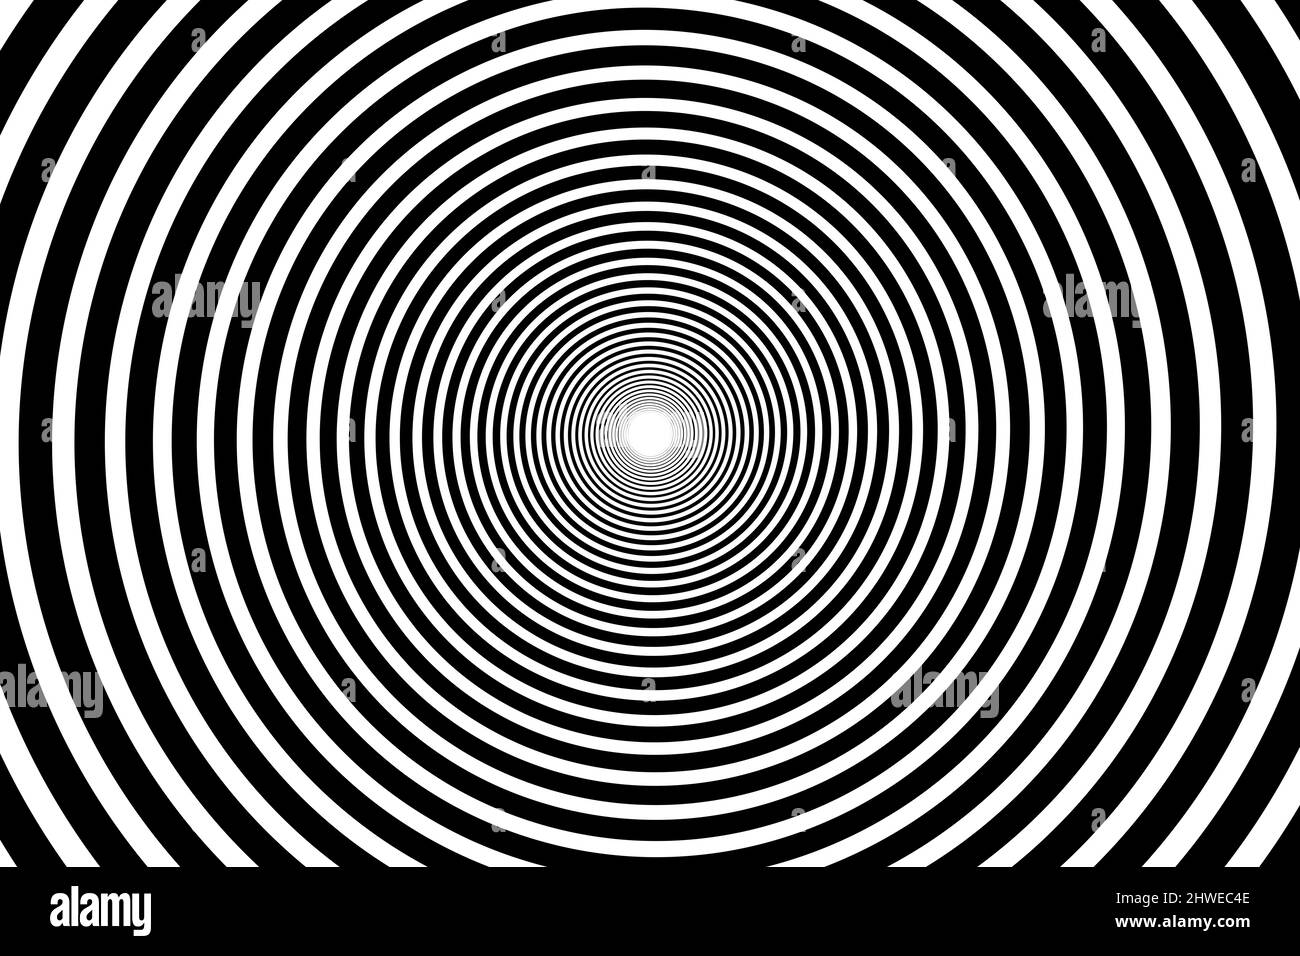 Full frame hypnotic spiral background. Stock Photo